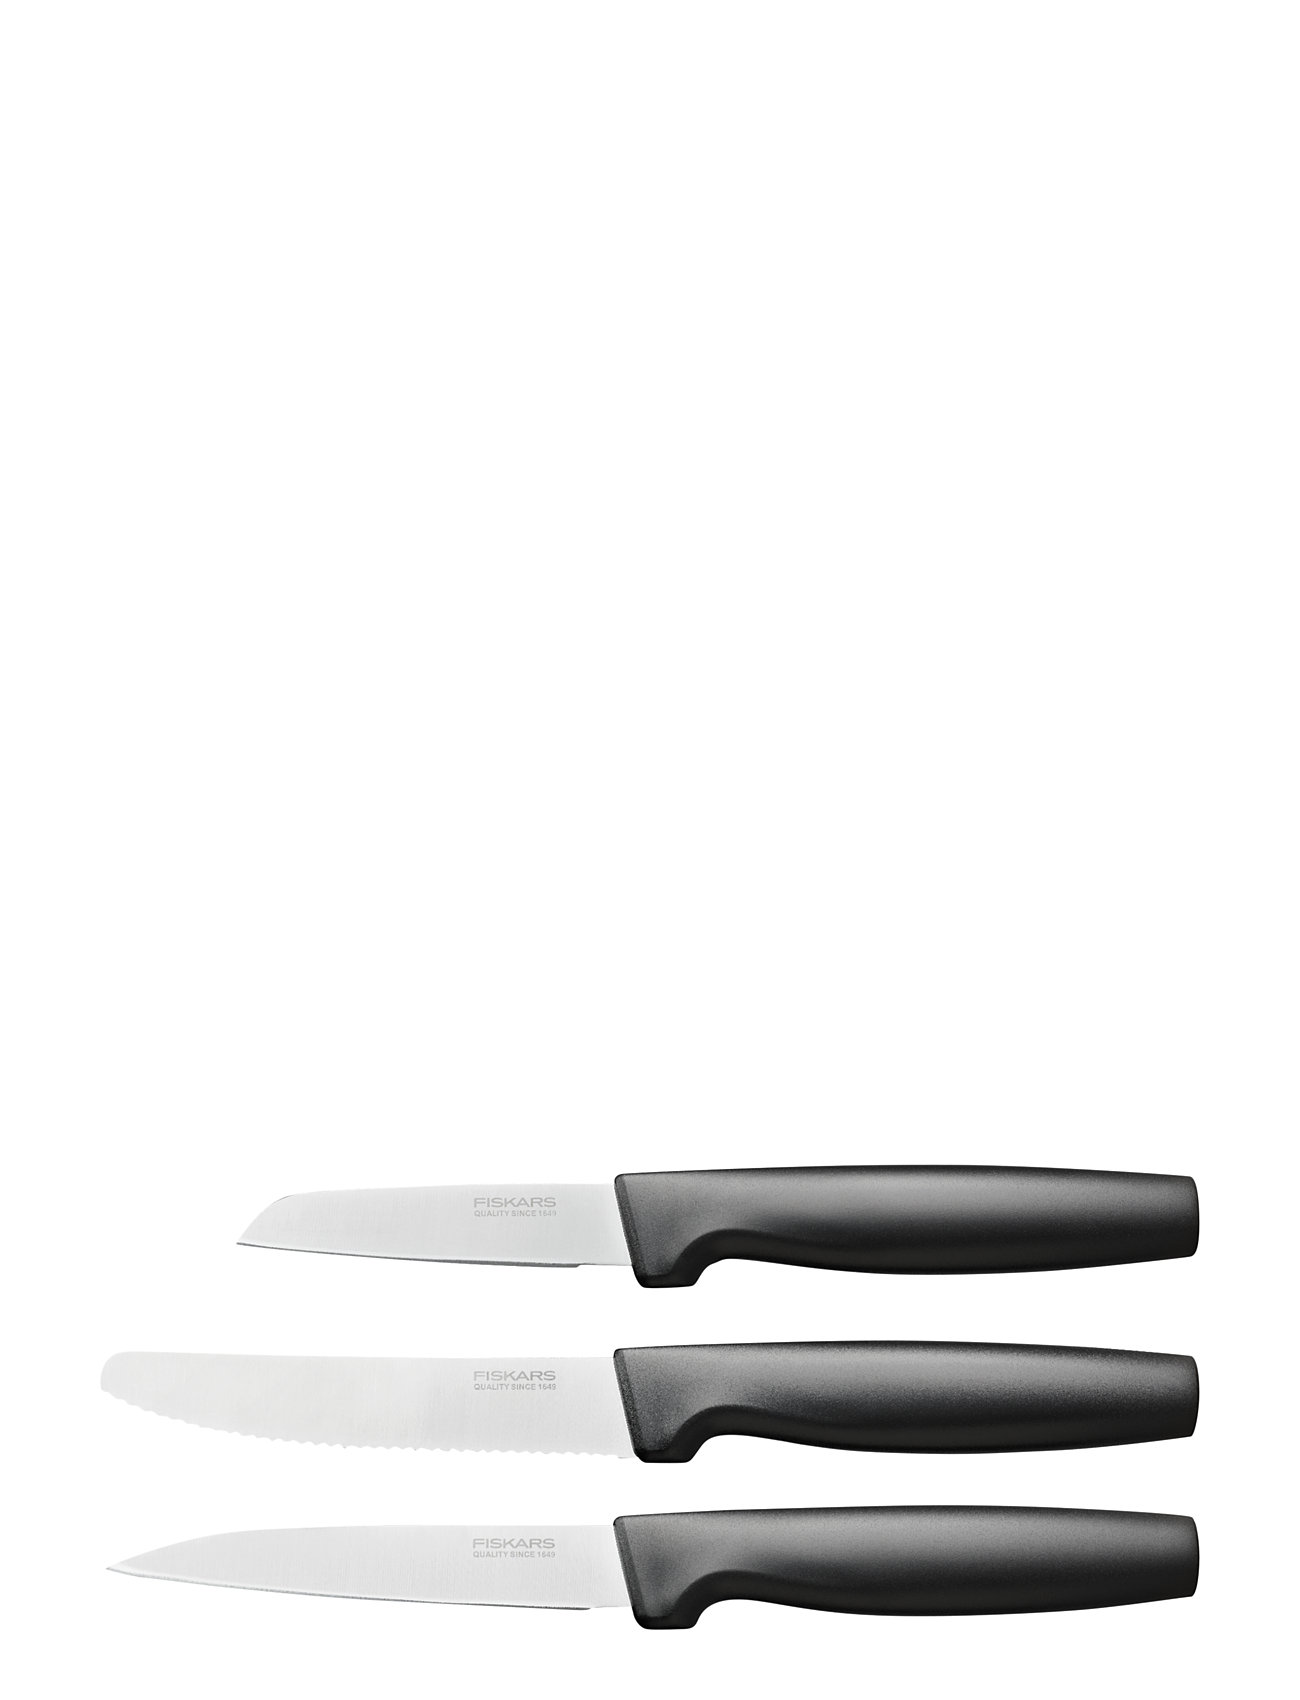 Ff Small Knife Set, 3 Parts Home Kitchen Knives & Accessories Knife Sets Black Fiskars